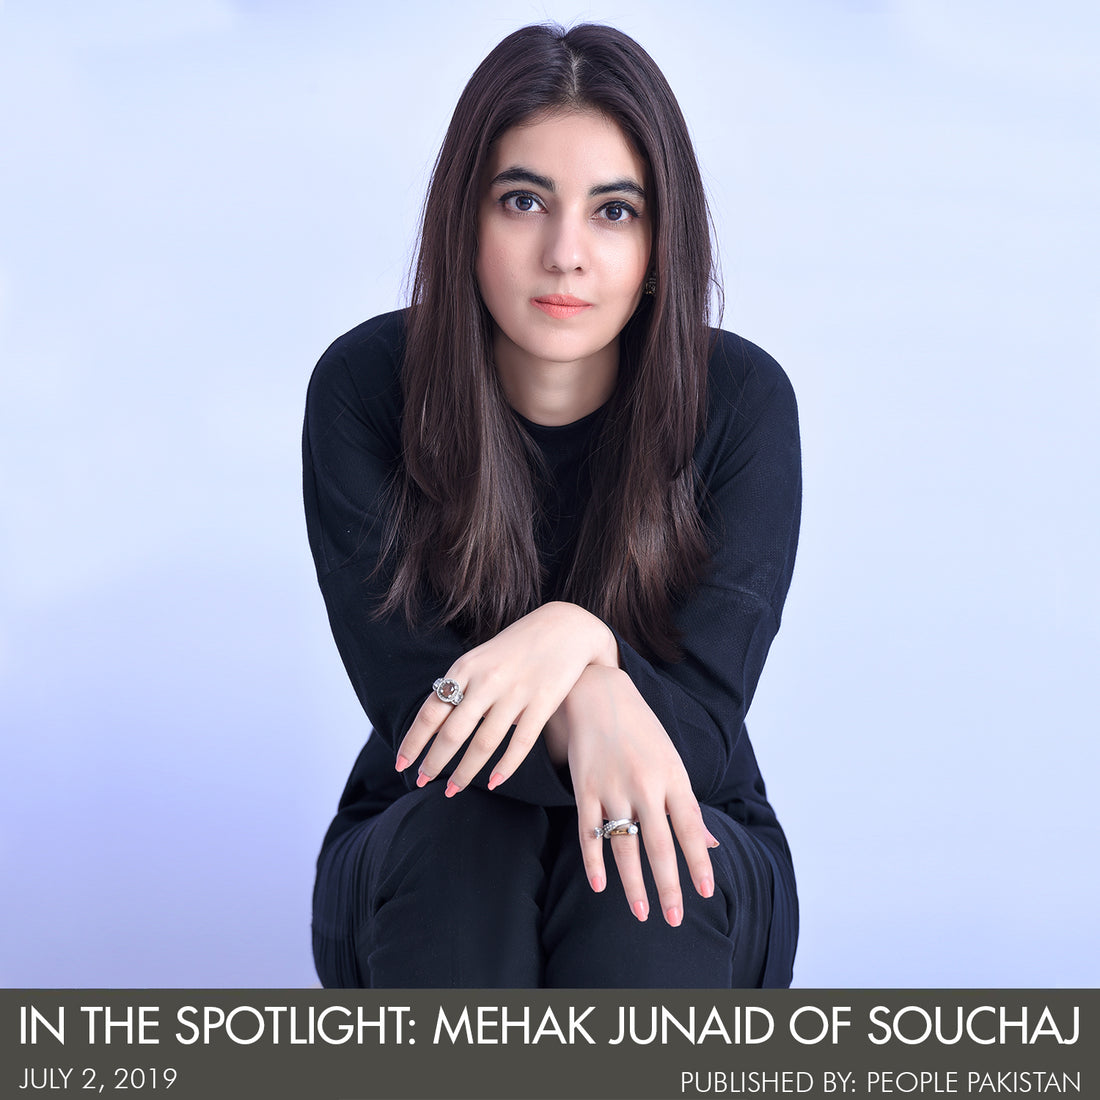 In The Spotlight: Mehak Junaid of Souchaj